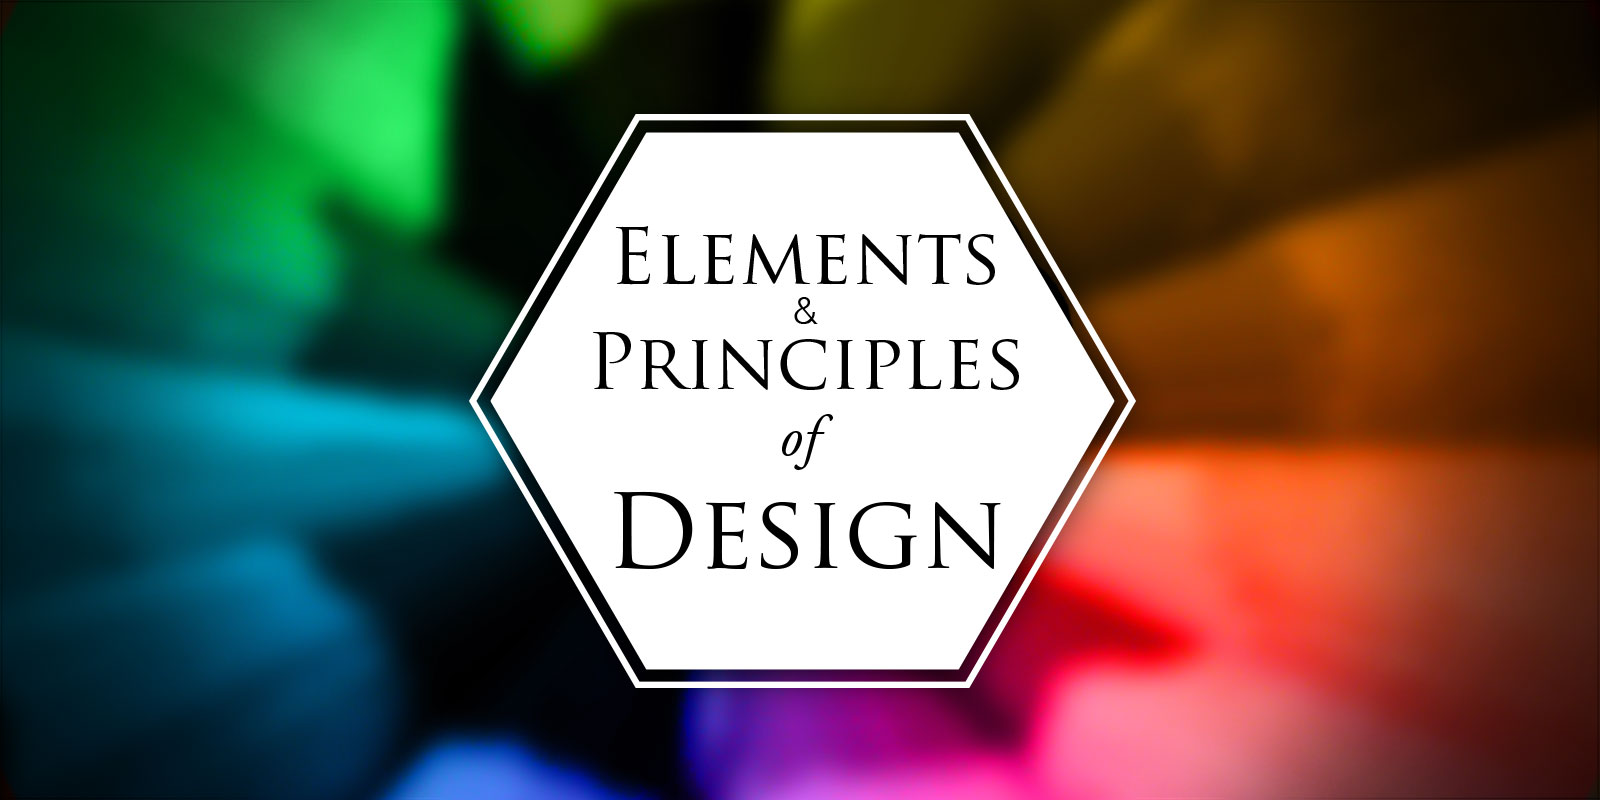 design elements